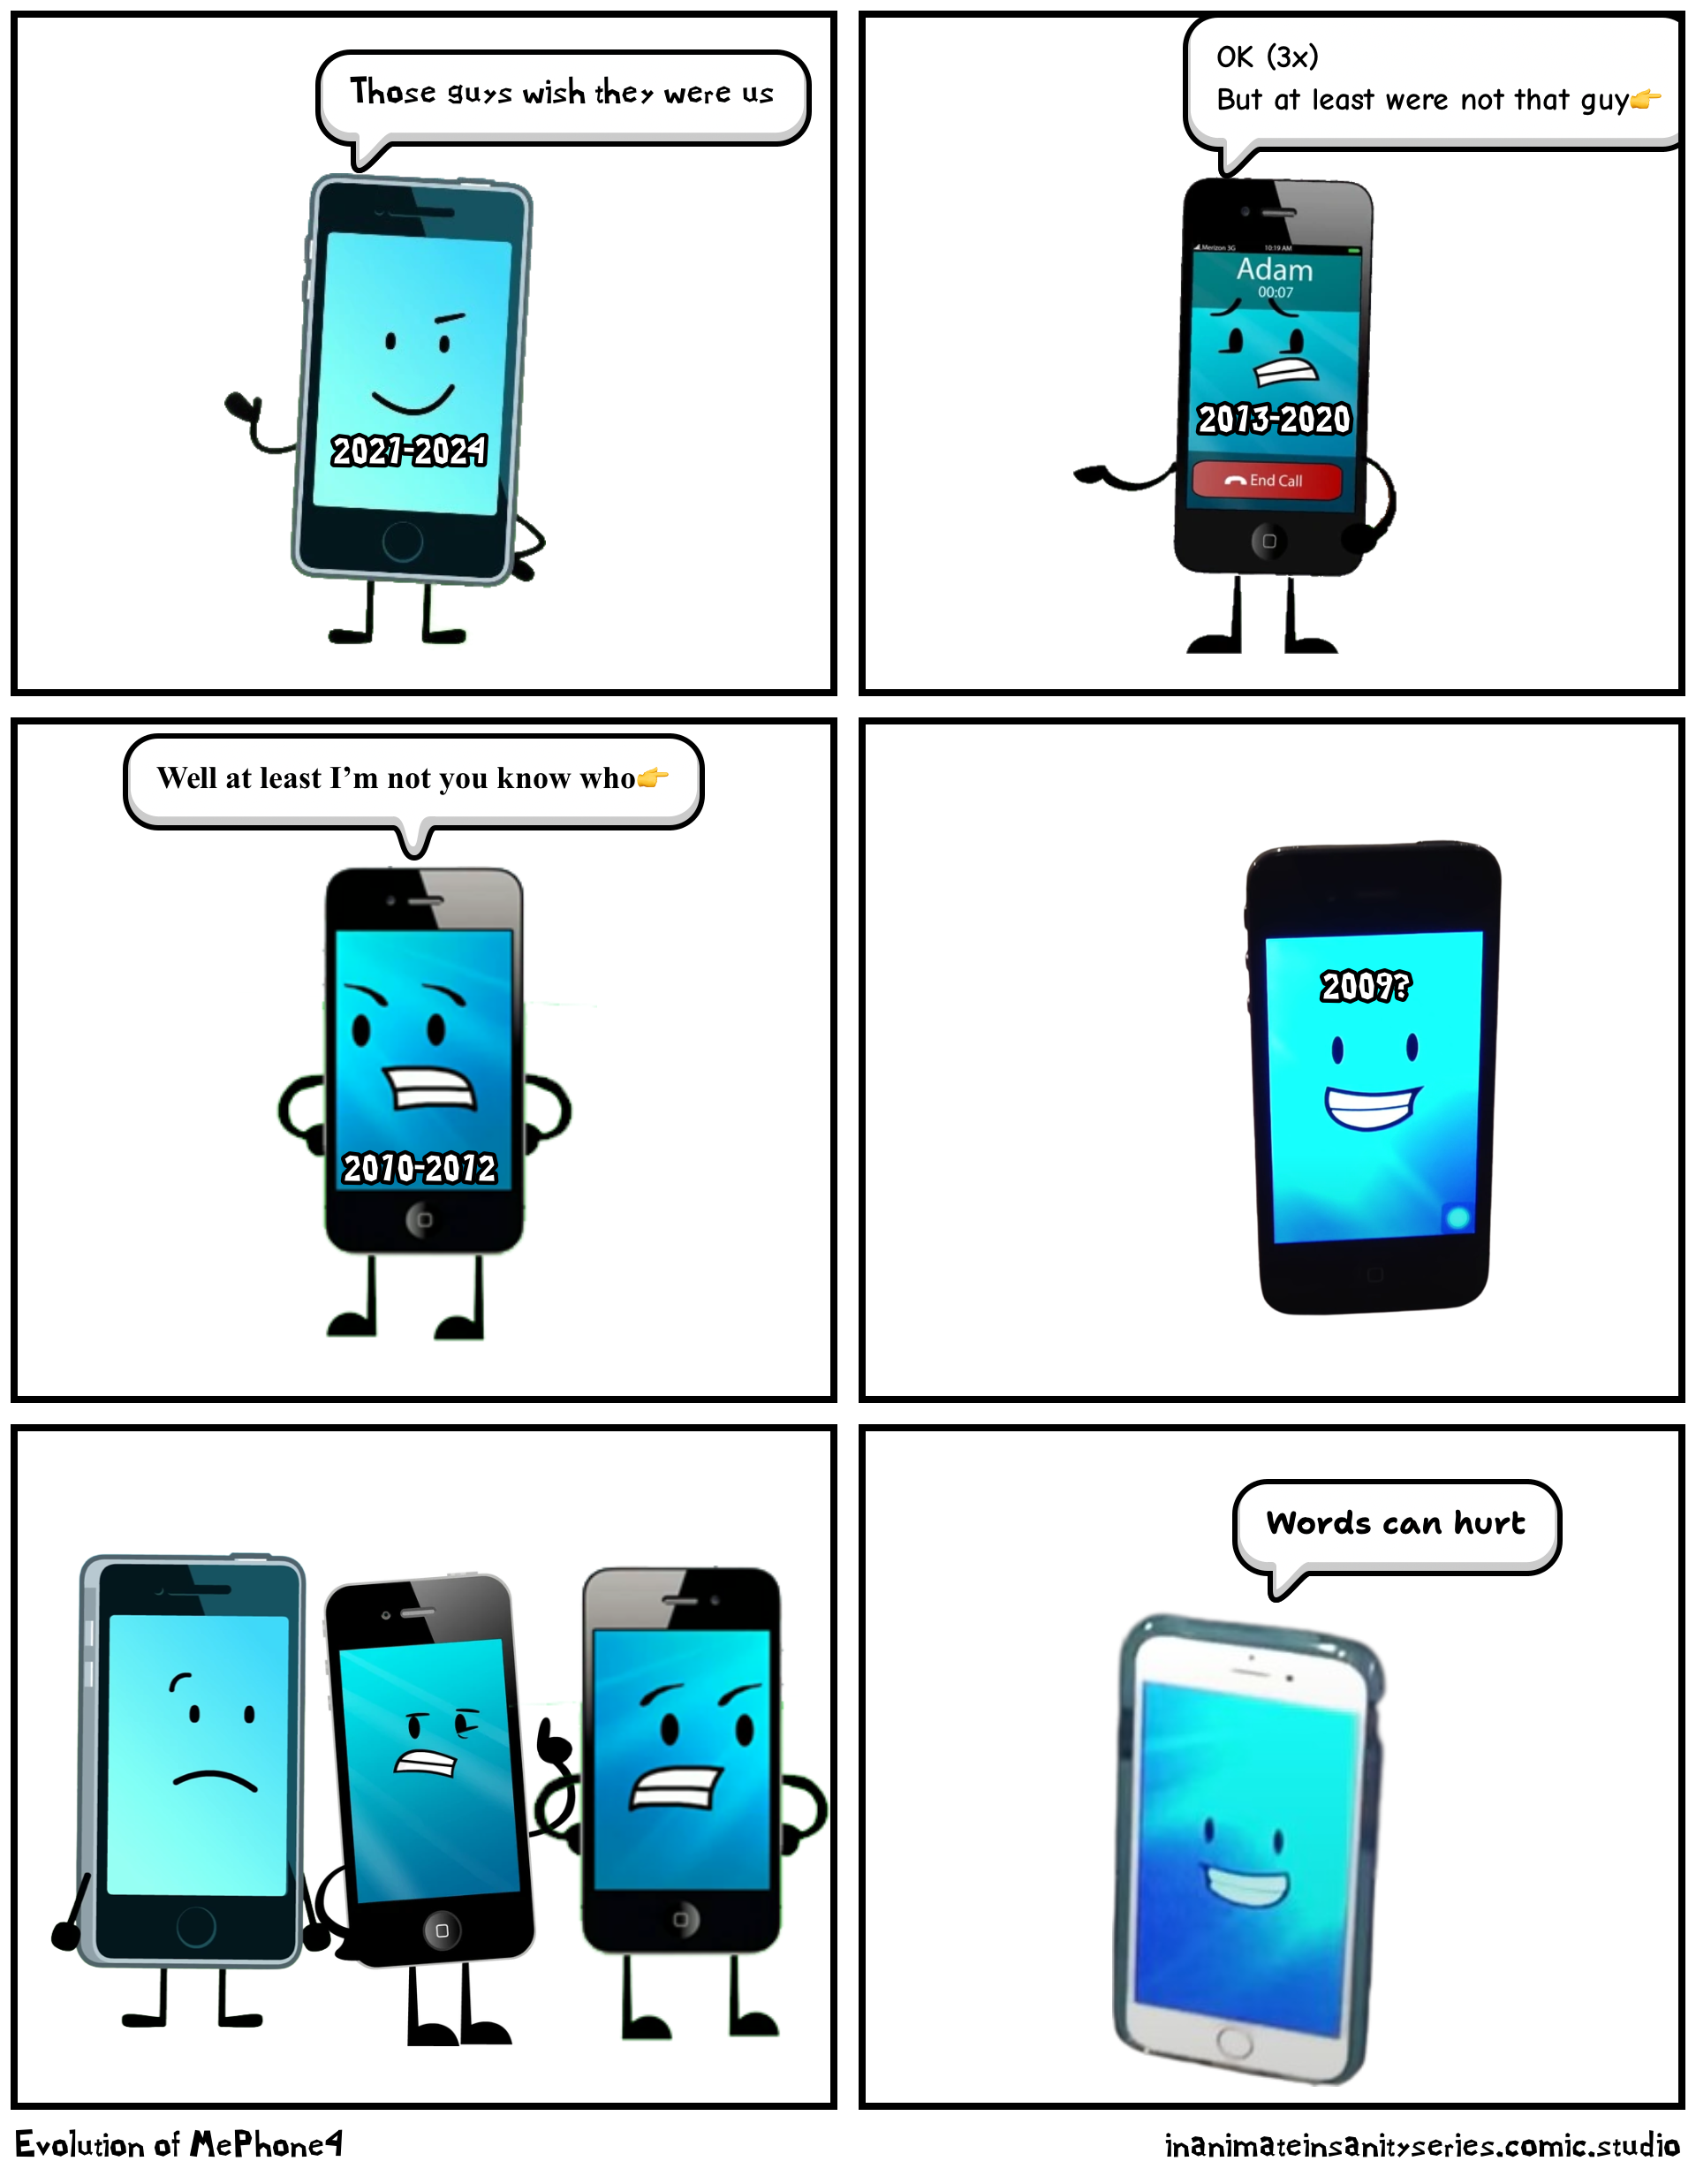 Evolution of MePhone4 